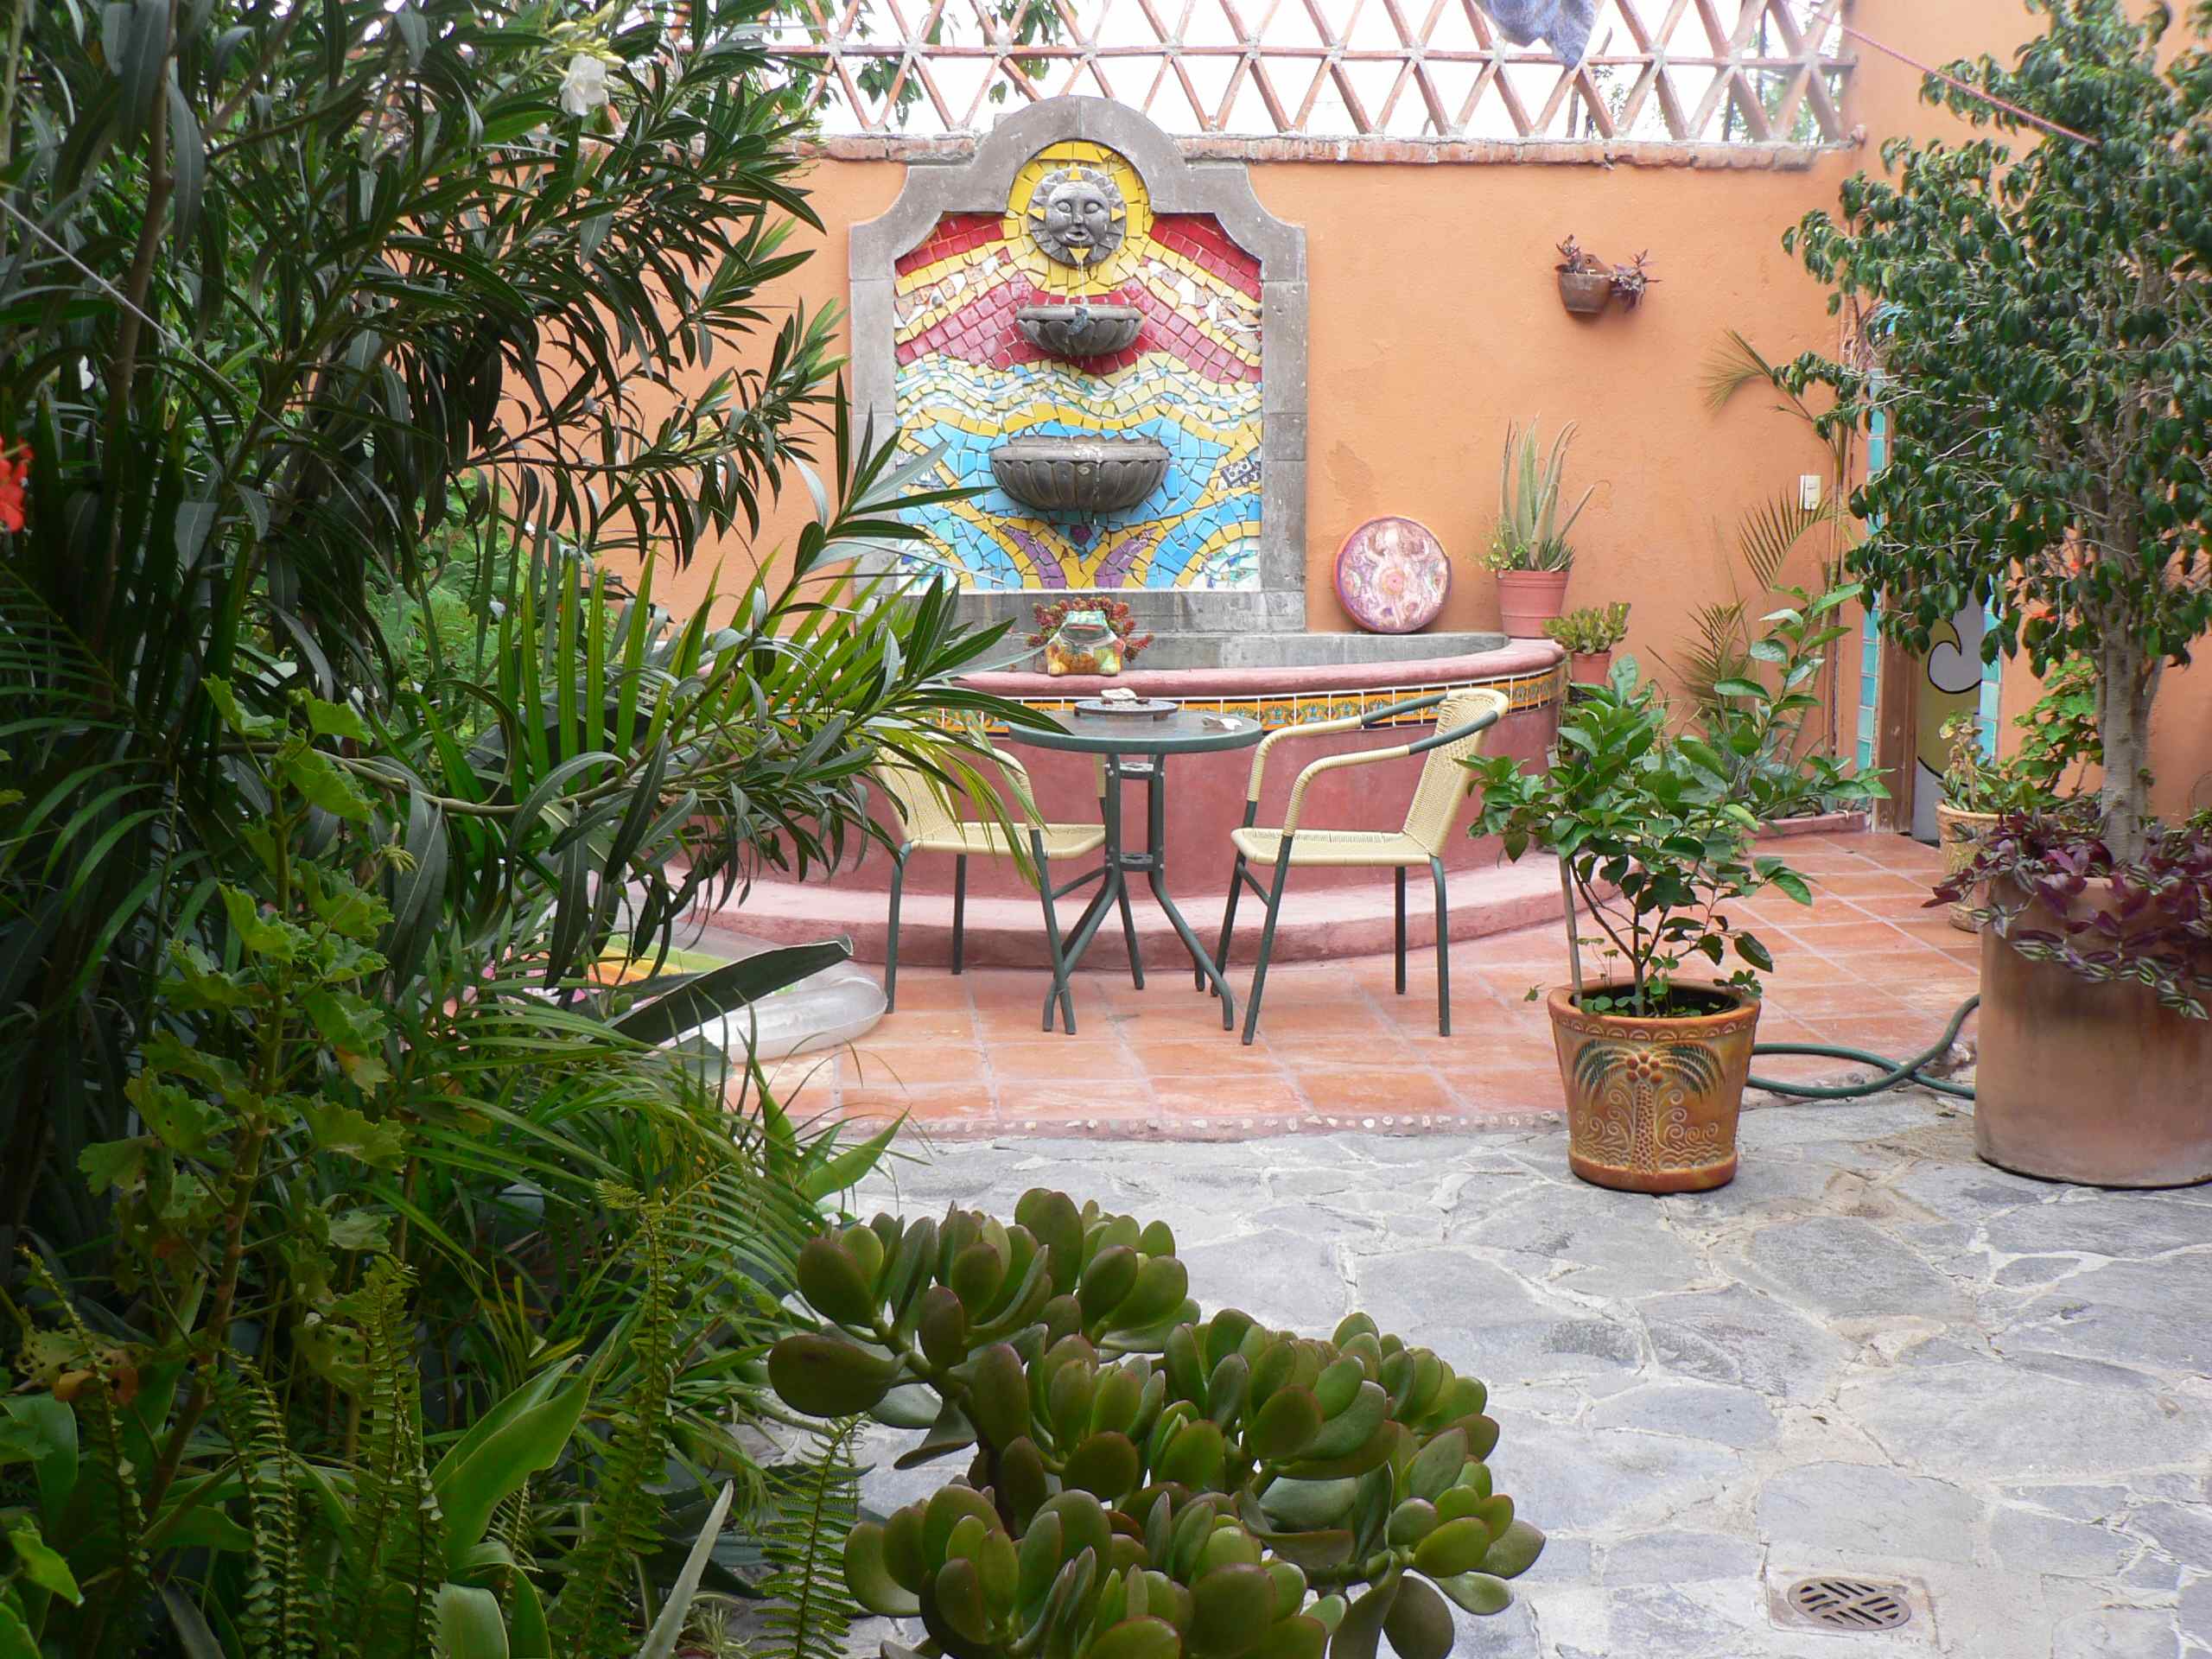 Casa with Courtyard Fountain, Gardens and Balcony